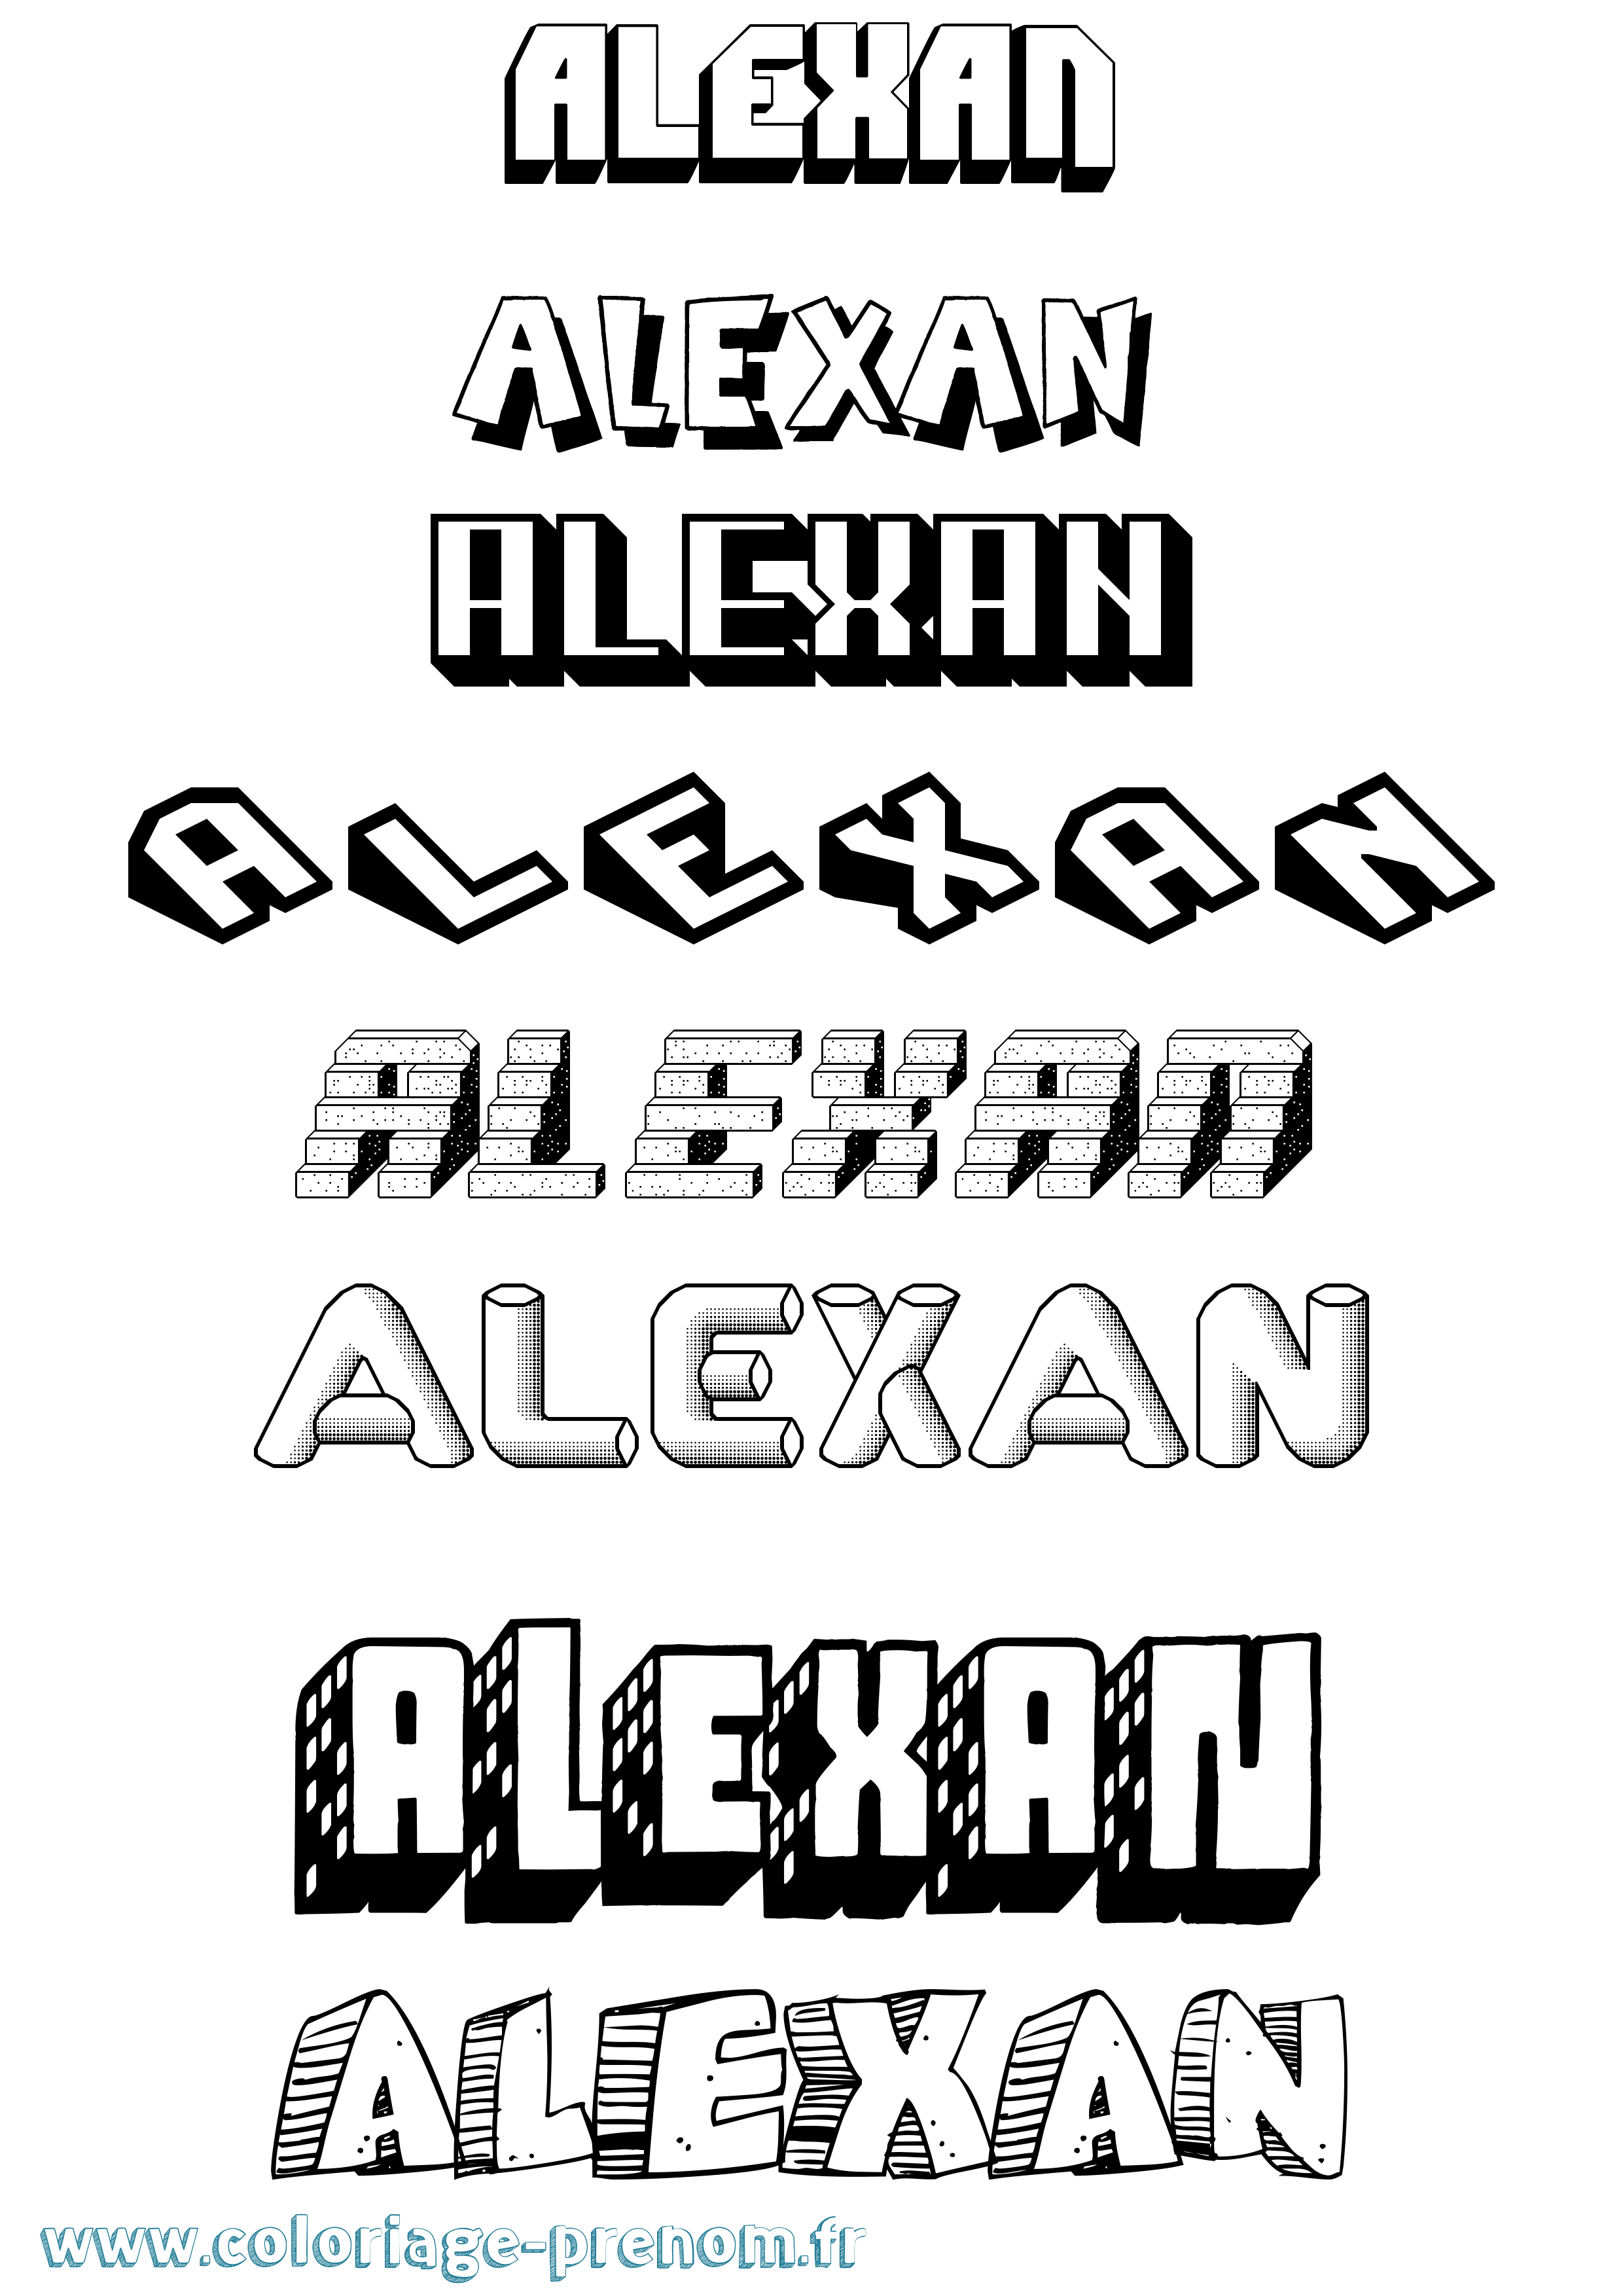 Coloriage prénom Alexan Effet 3D